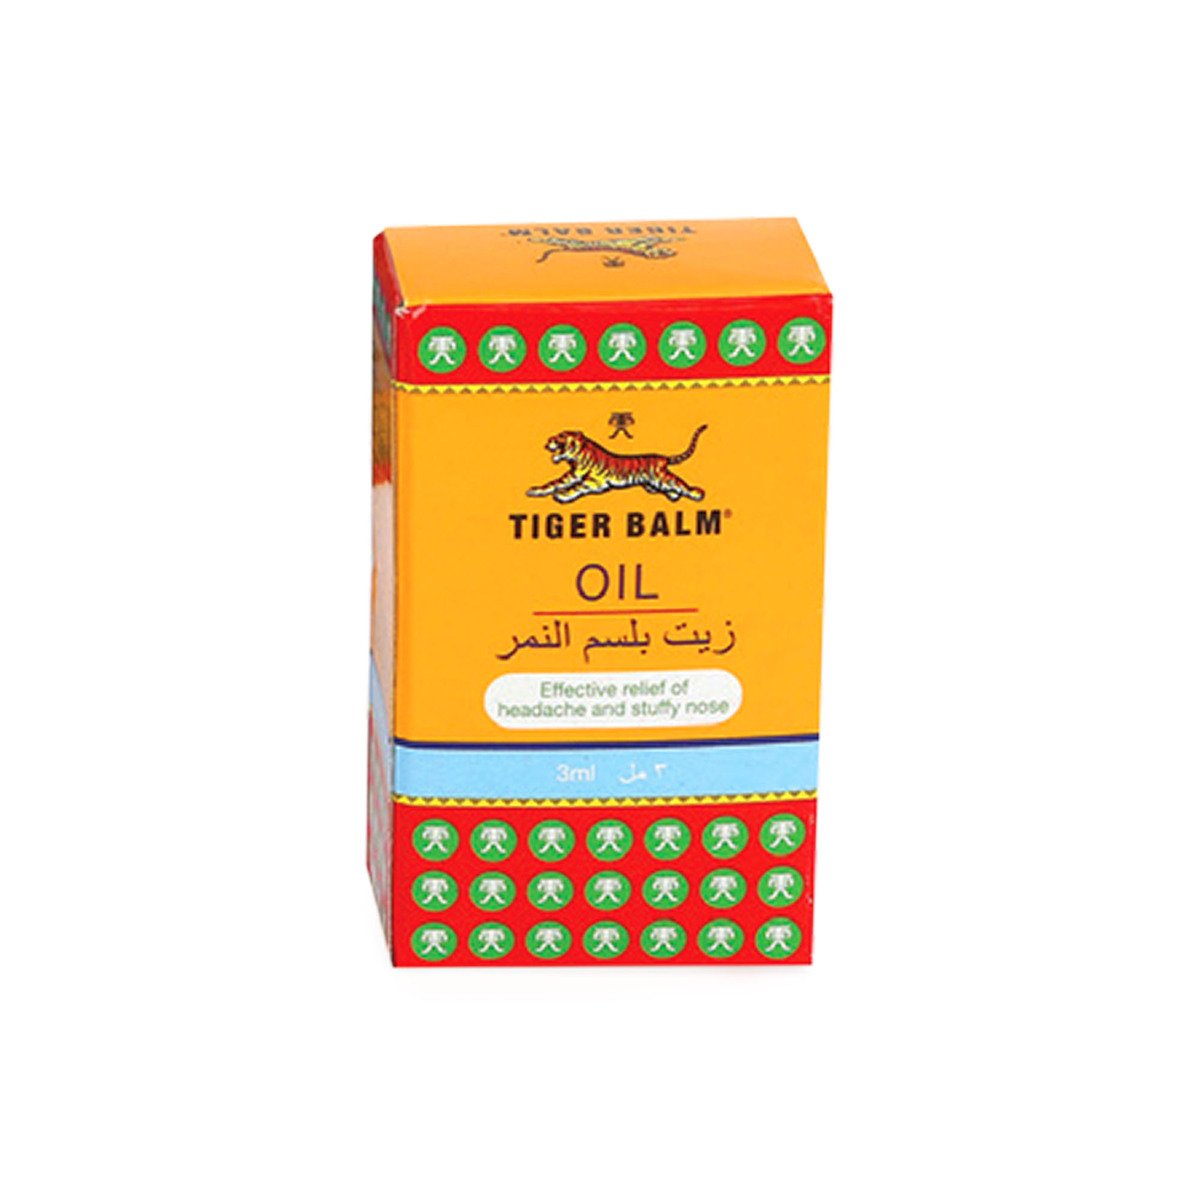 Tiger Balm Oil Value Pack 6 x 3 ml